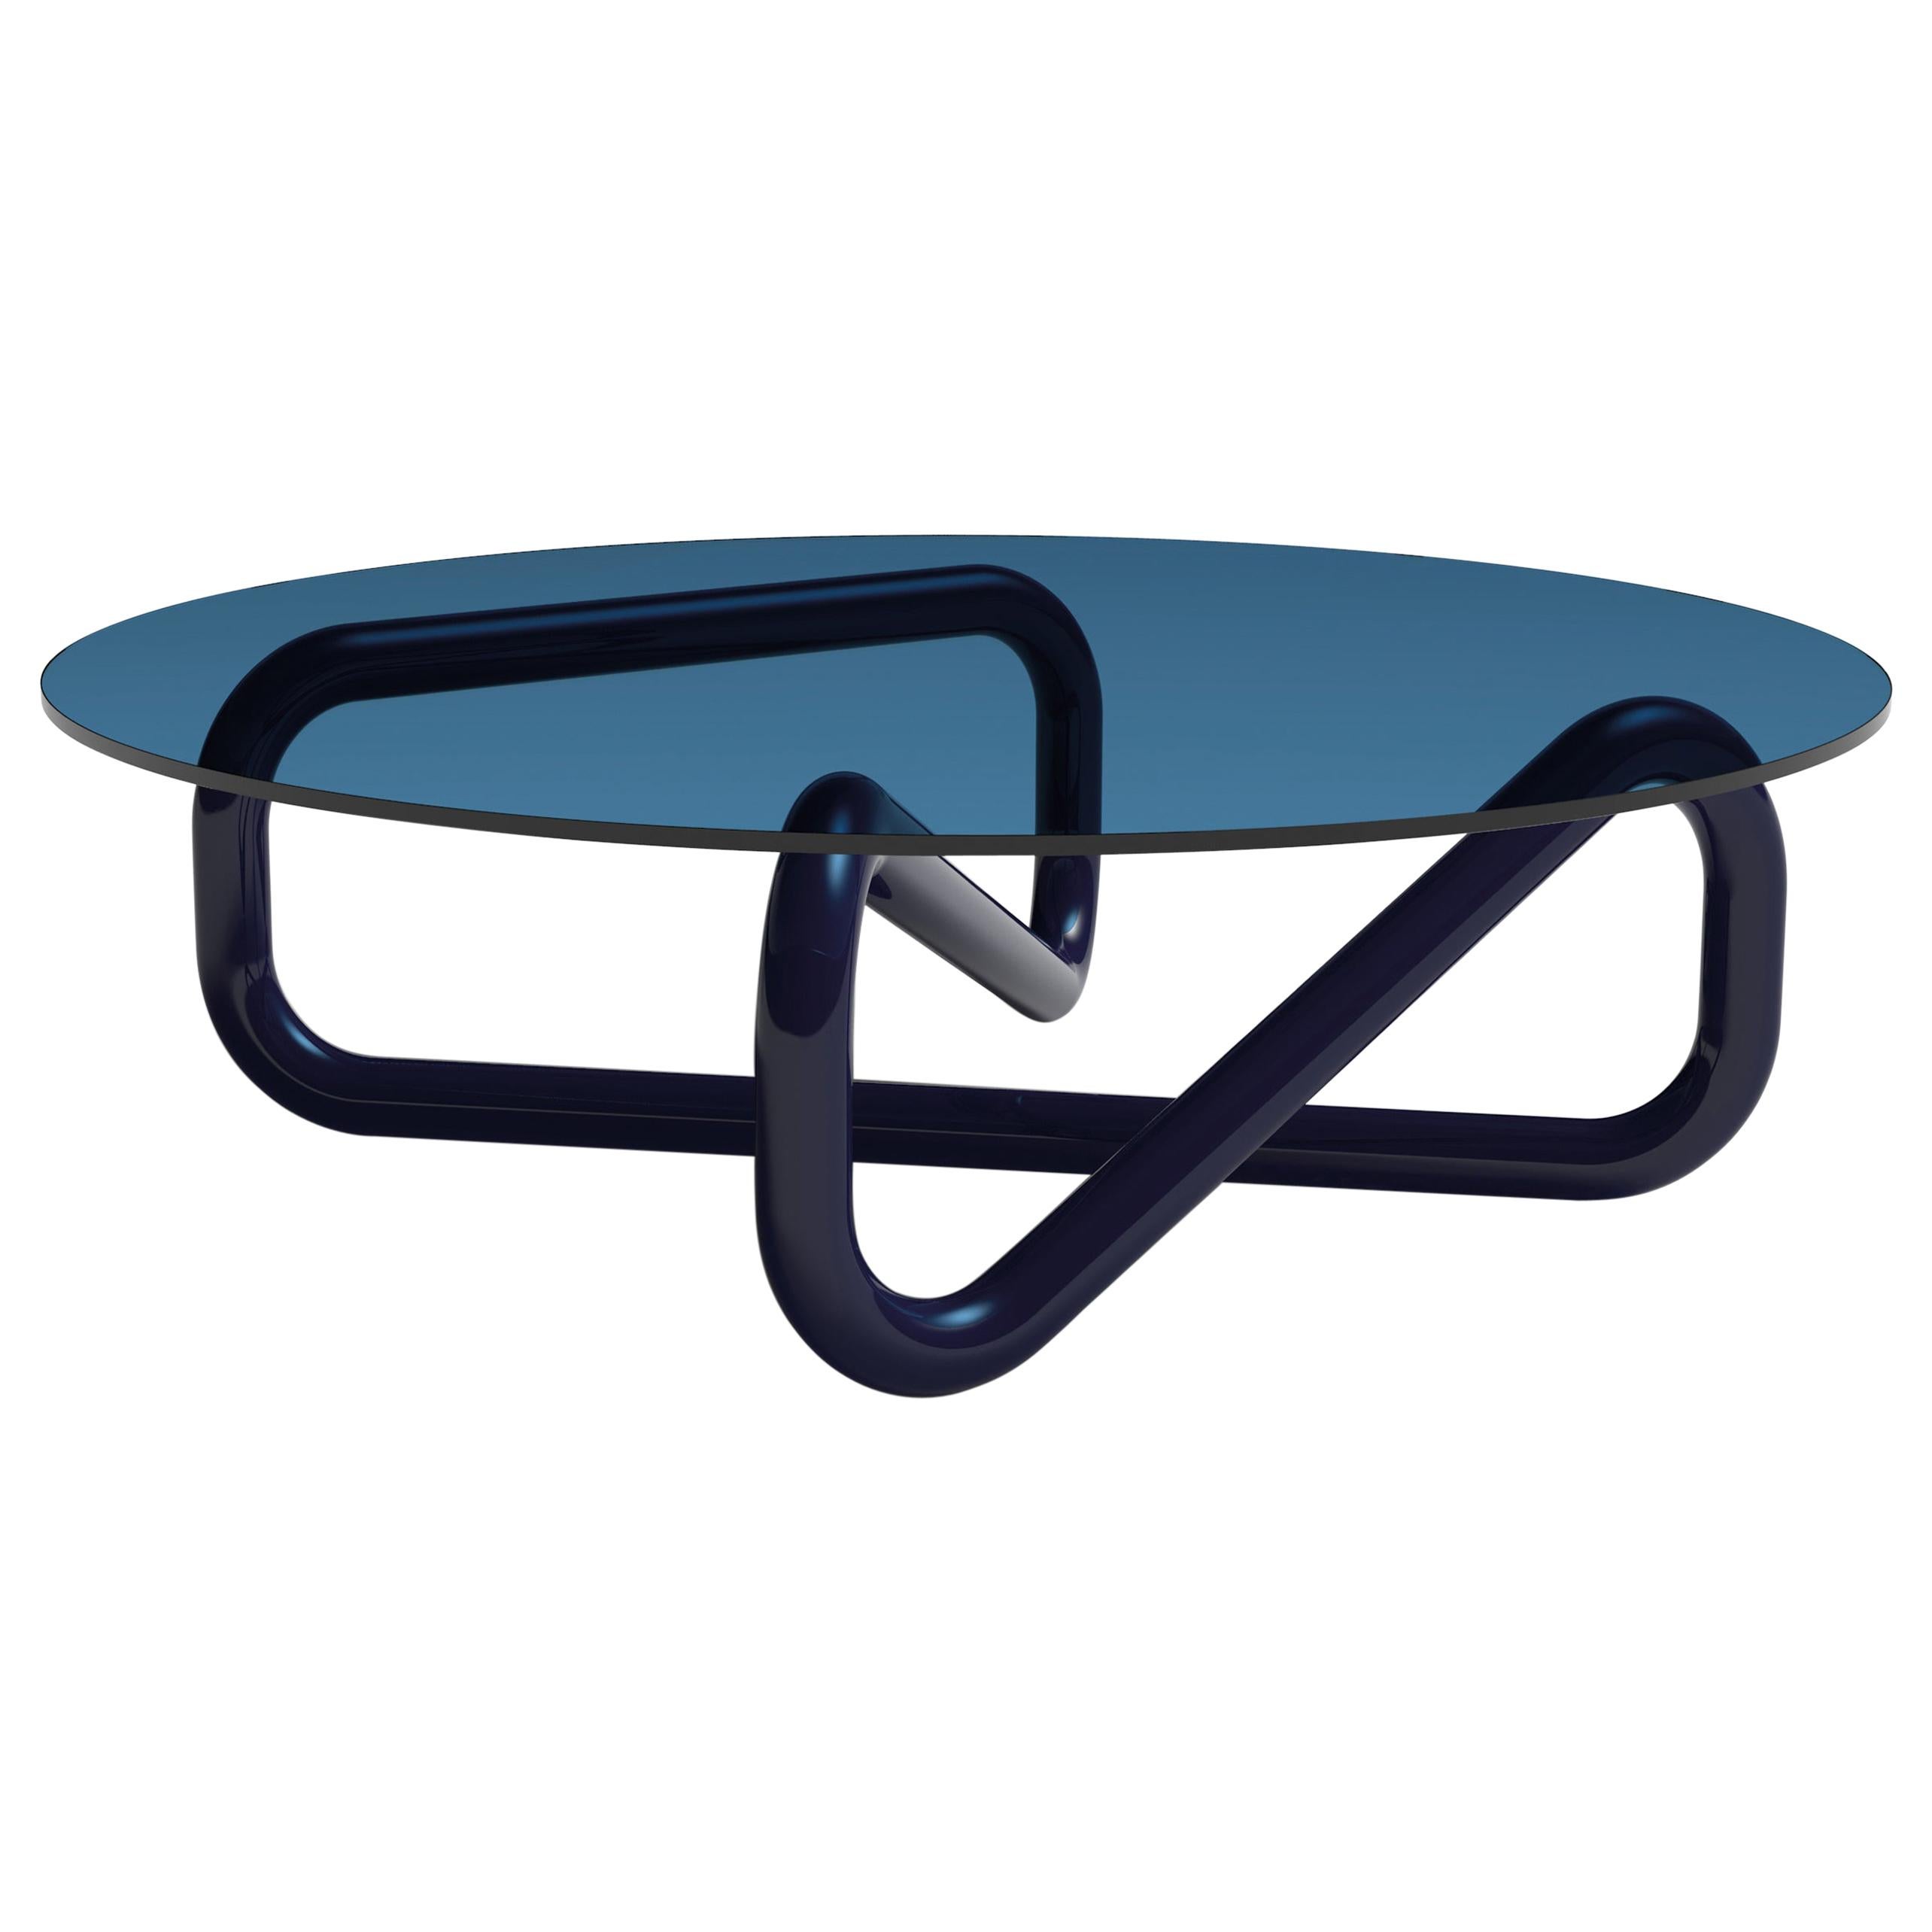 Arflex Infinity 130cm  Small Table in Light Blue Glass by Claesson Koivisto Rune